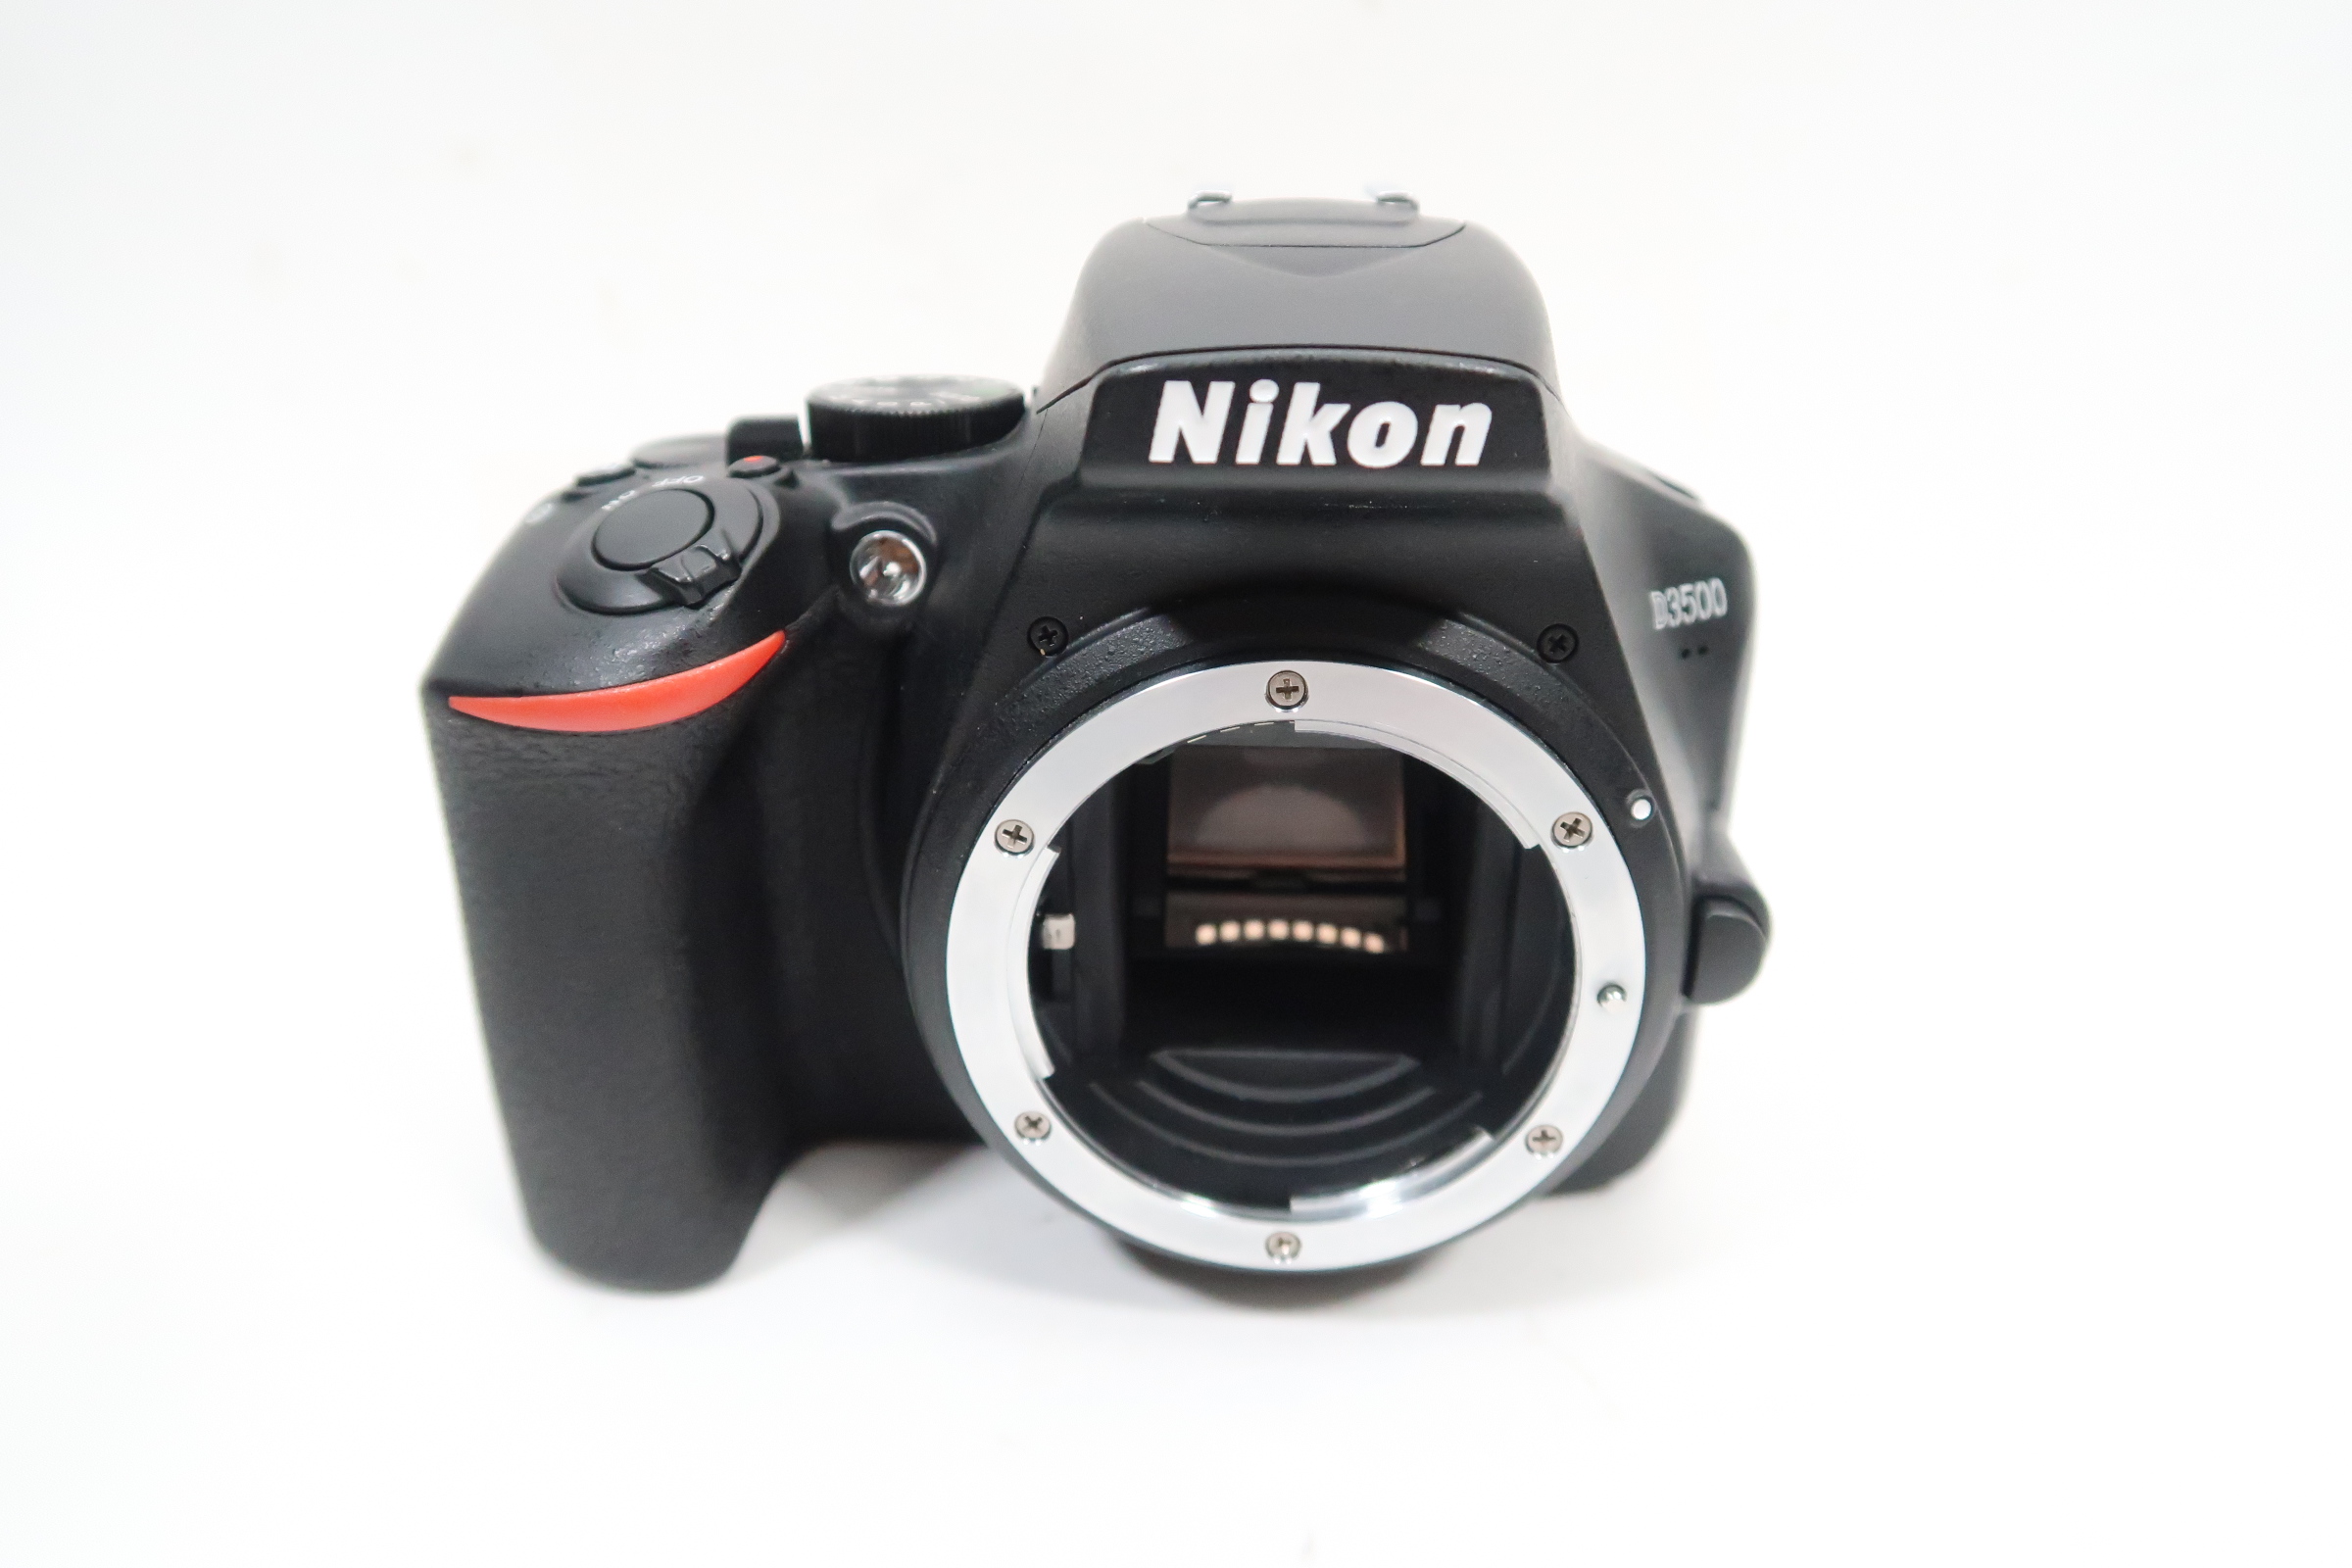 Nikon D3500 24.2MP DSLR Camera Body